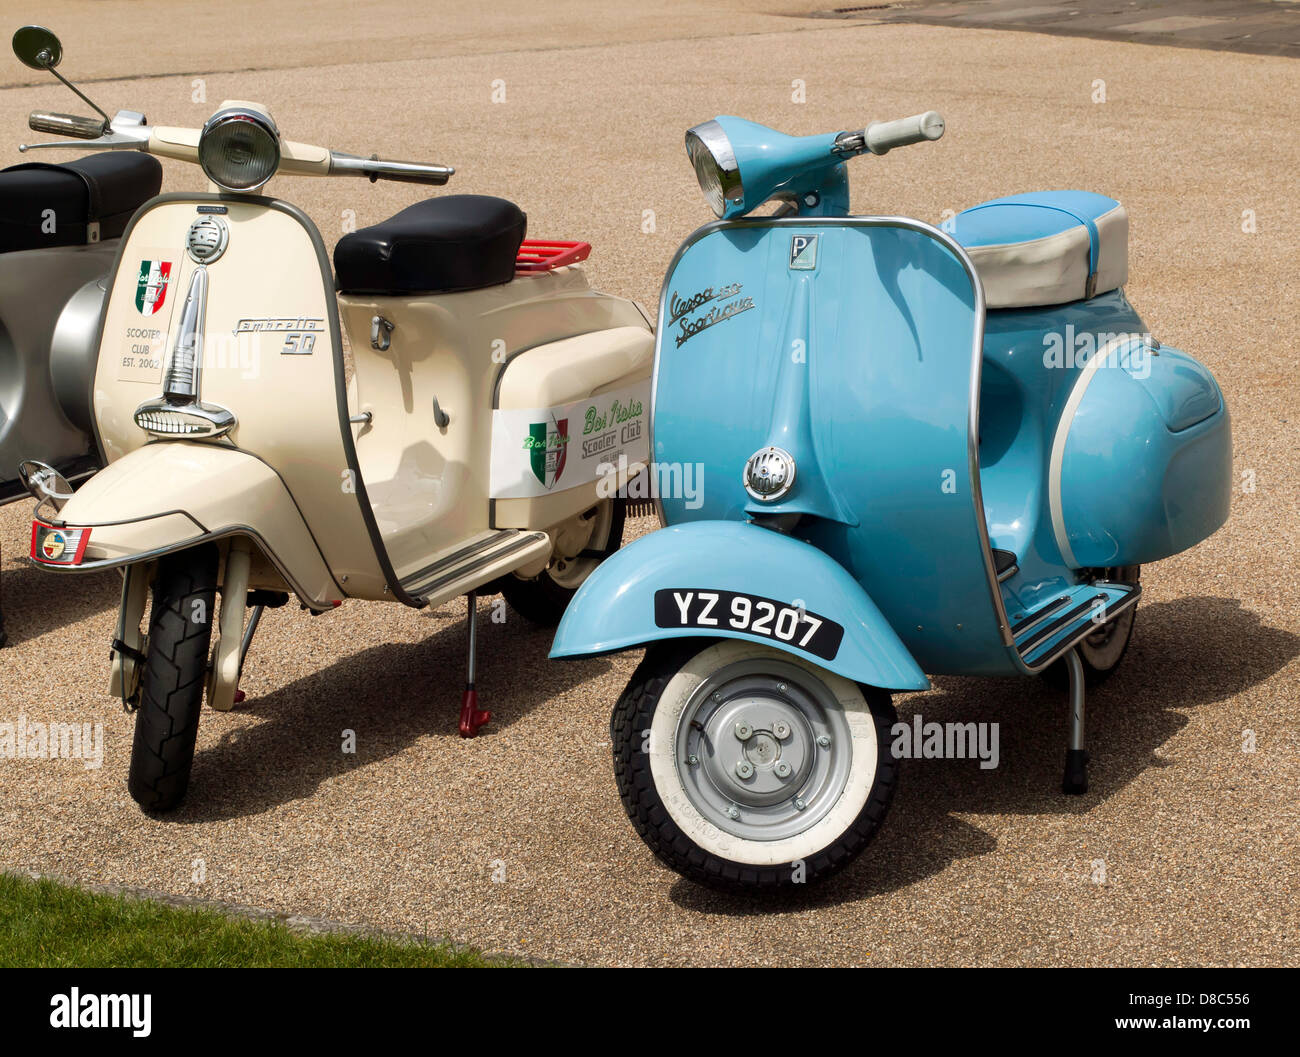 Image of a classic 1960's Vespa Sportique 150 scooter made by  Piaggo/Douglas Stock Photo - Alamy